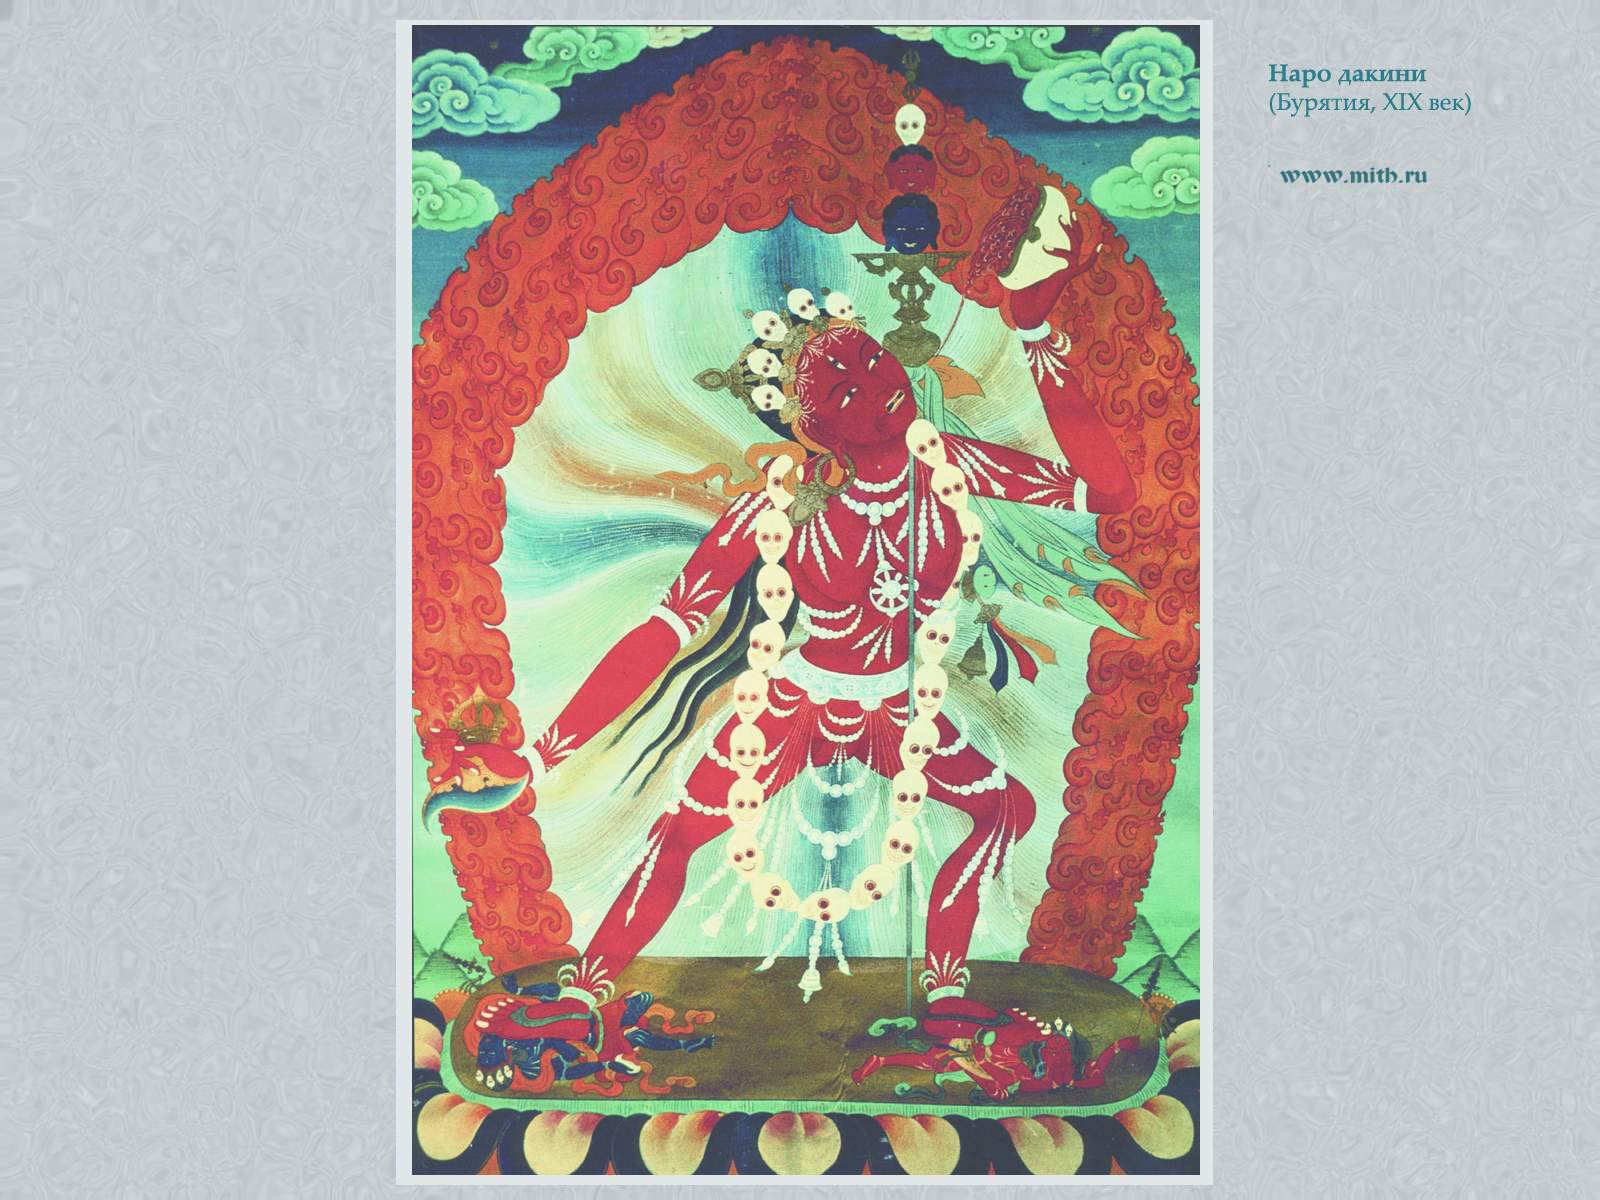 дакини Наро

перейти к книге 'Тибетская живопись'